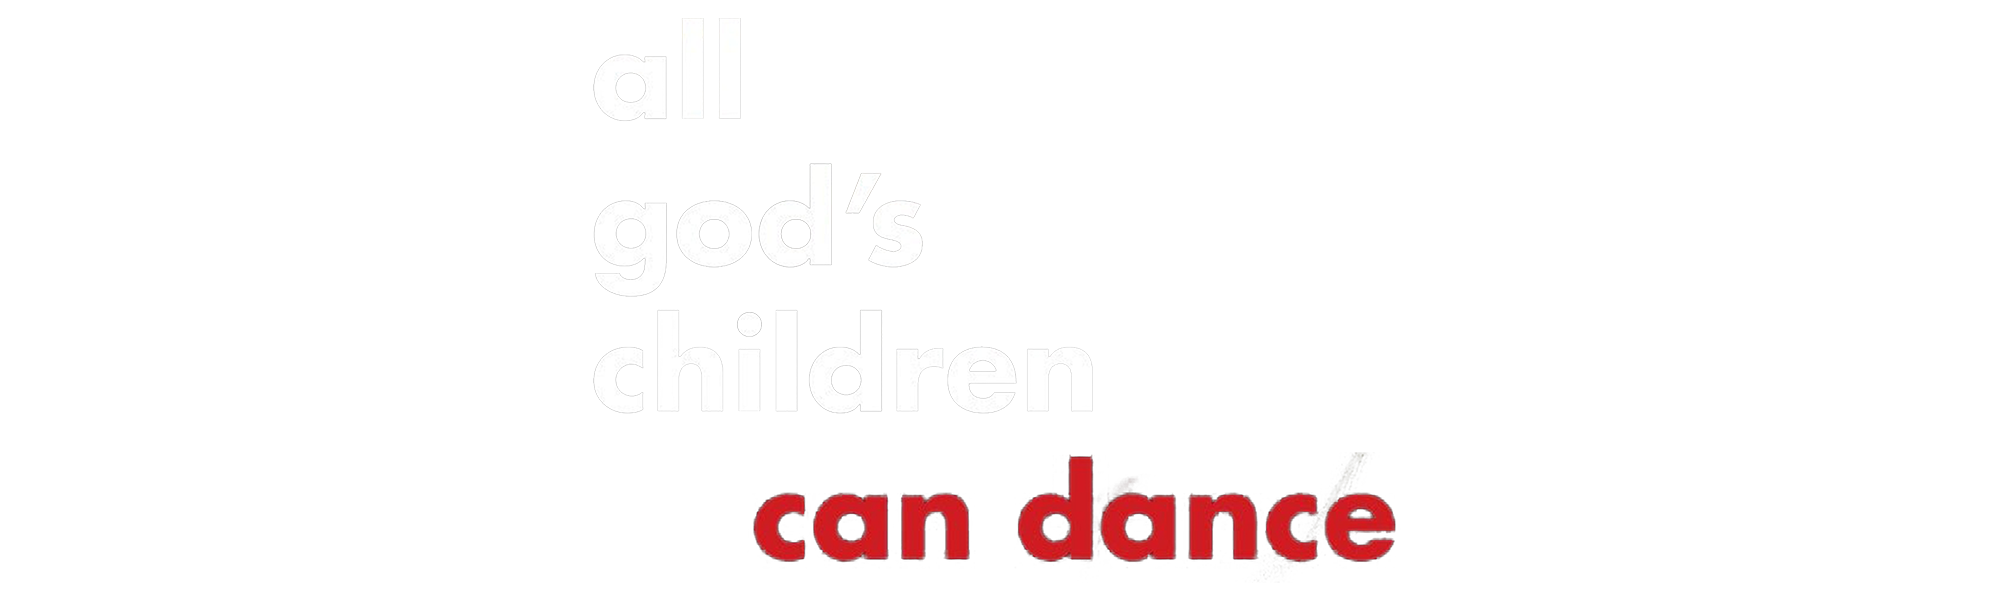 All God&#x27;s Children Can Dance